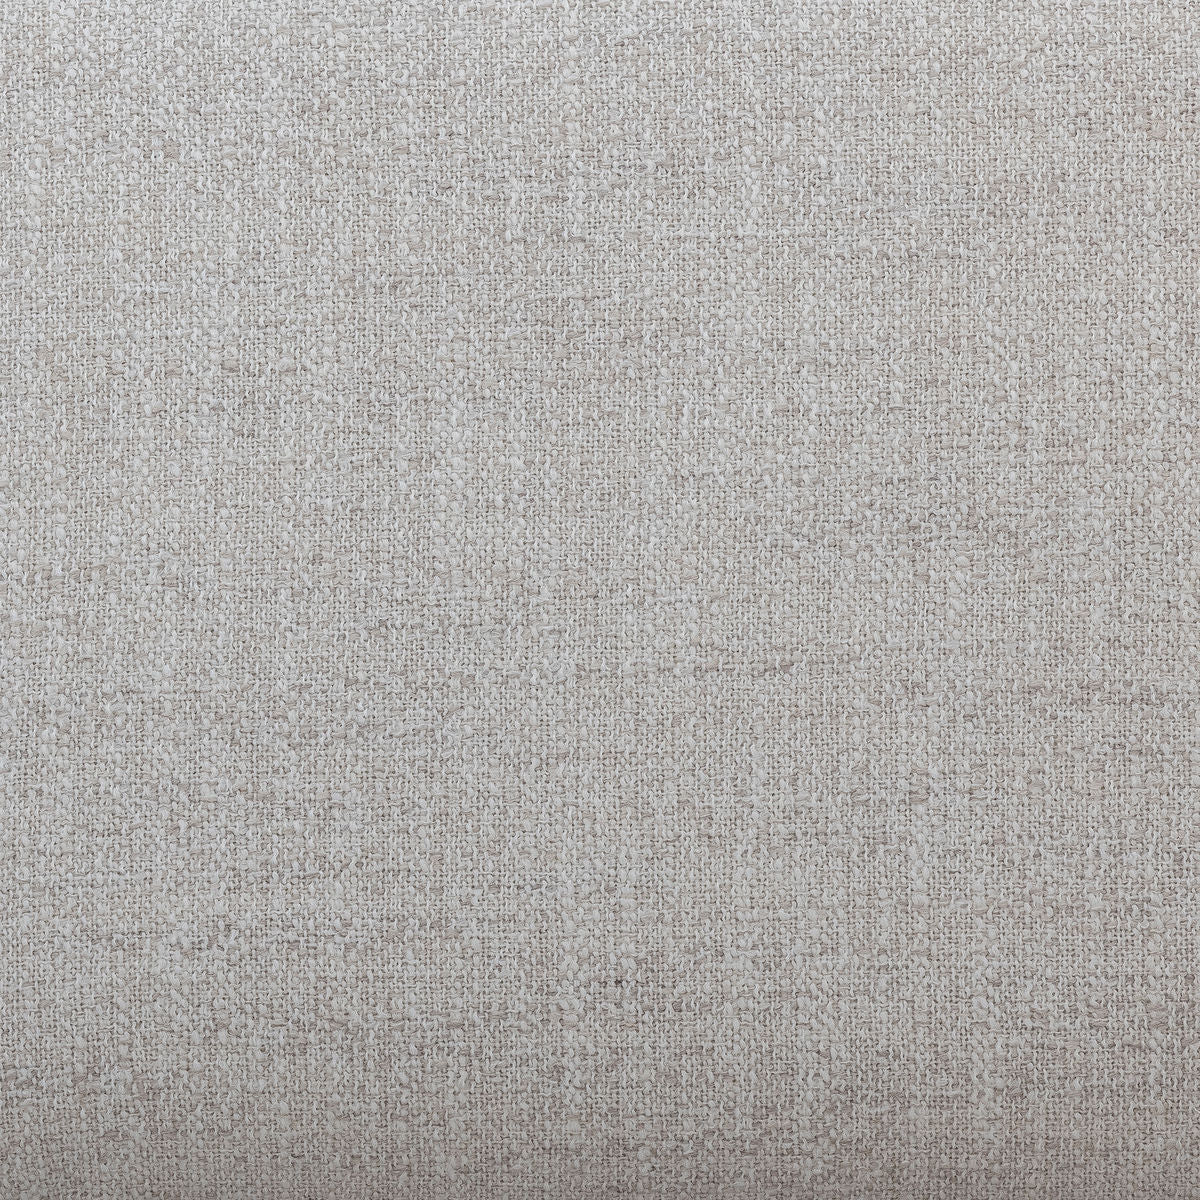 Bloomingville Chesham -sohva, valkoinen, polyesteri